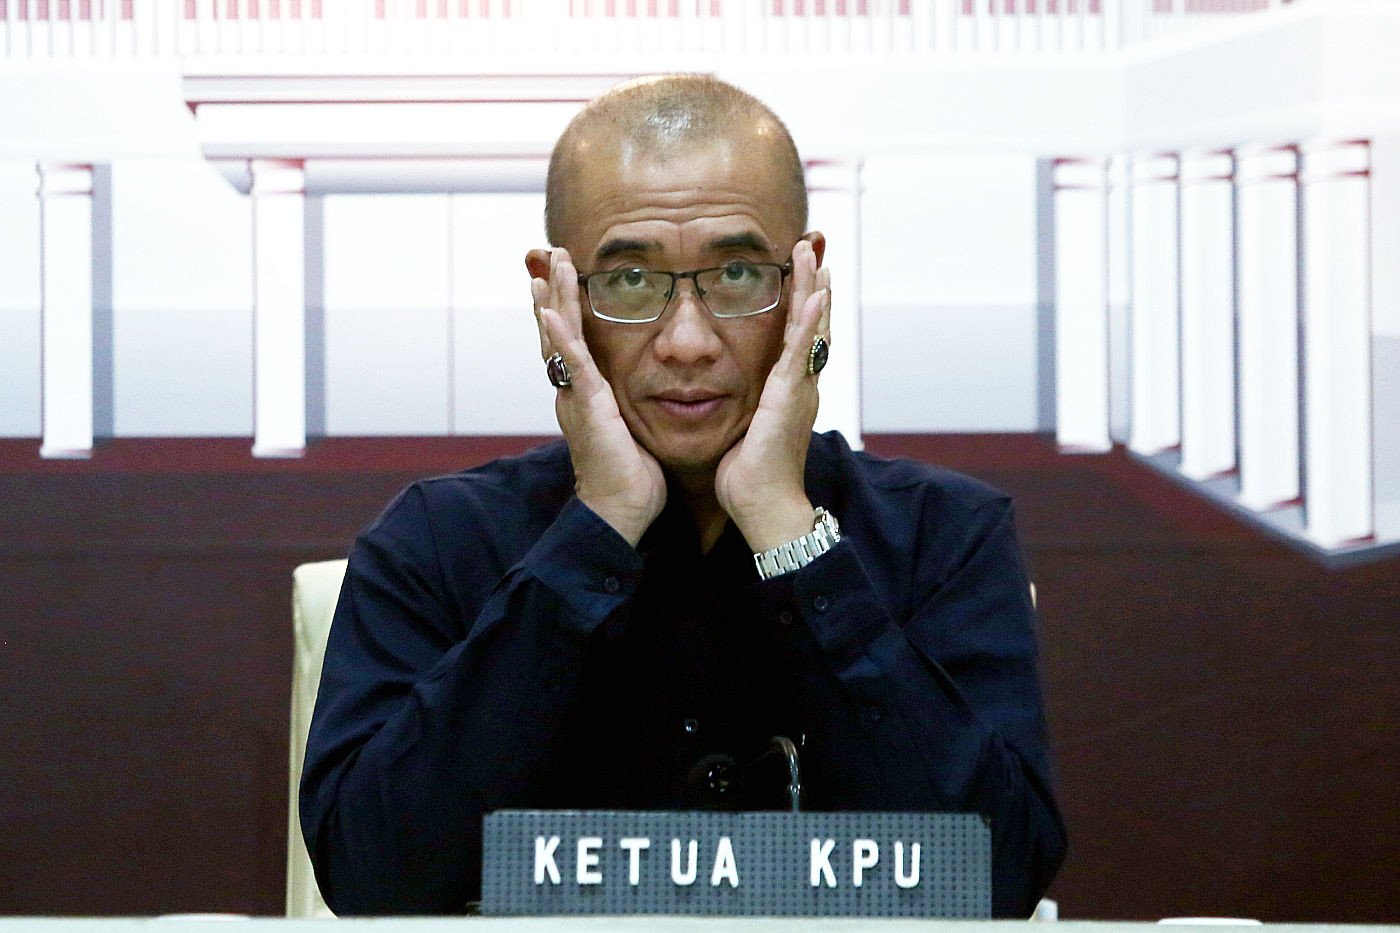 Ketua KPU Hasyim Asyari Dipecat Gegara Asusila, Begini Reaksi Doli Kurnia